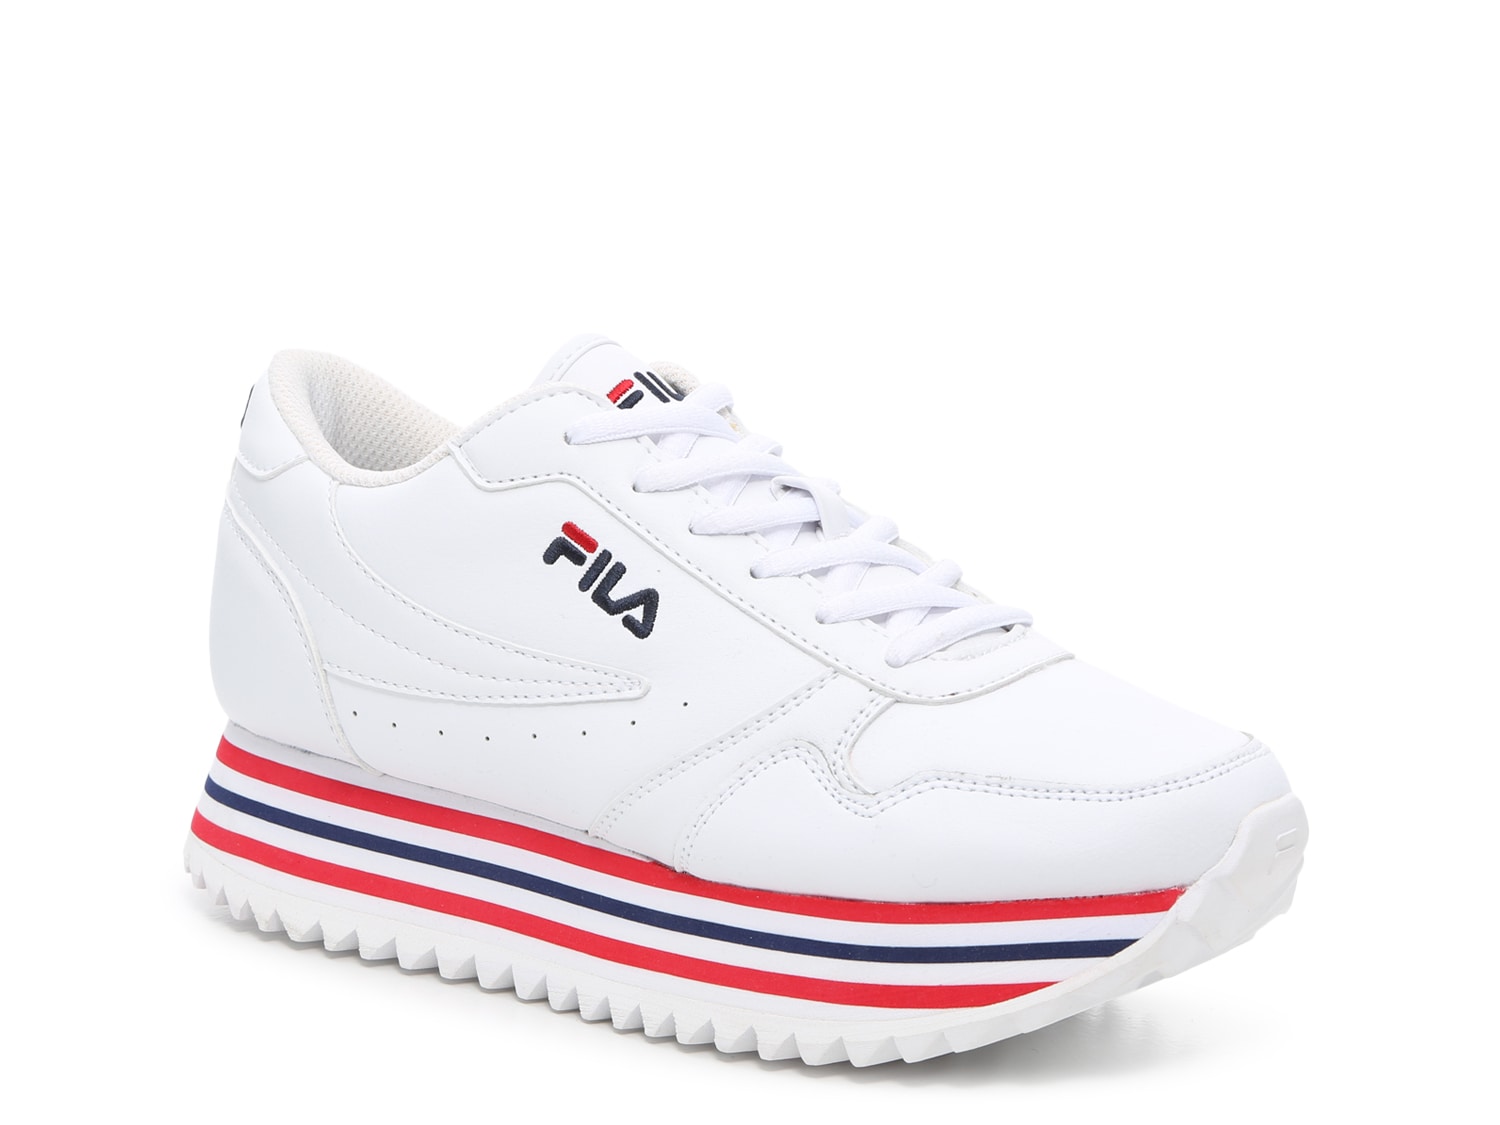 fila platform sneakers white